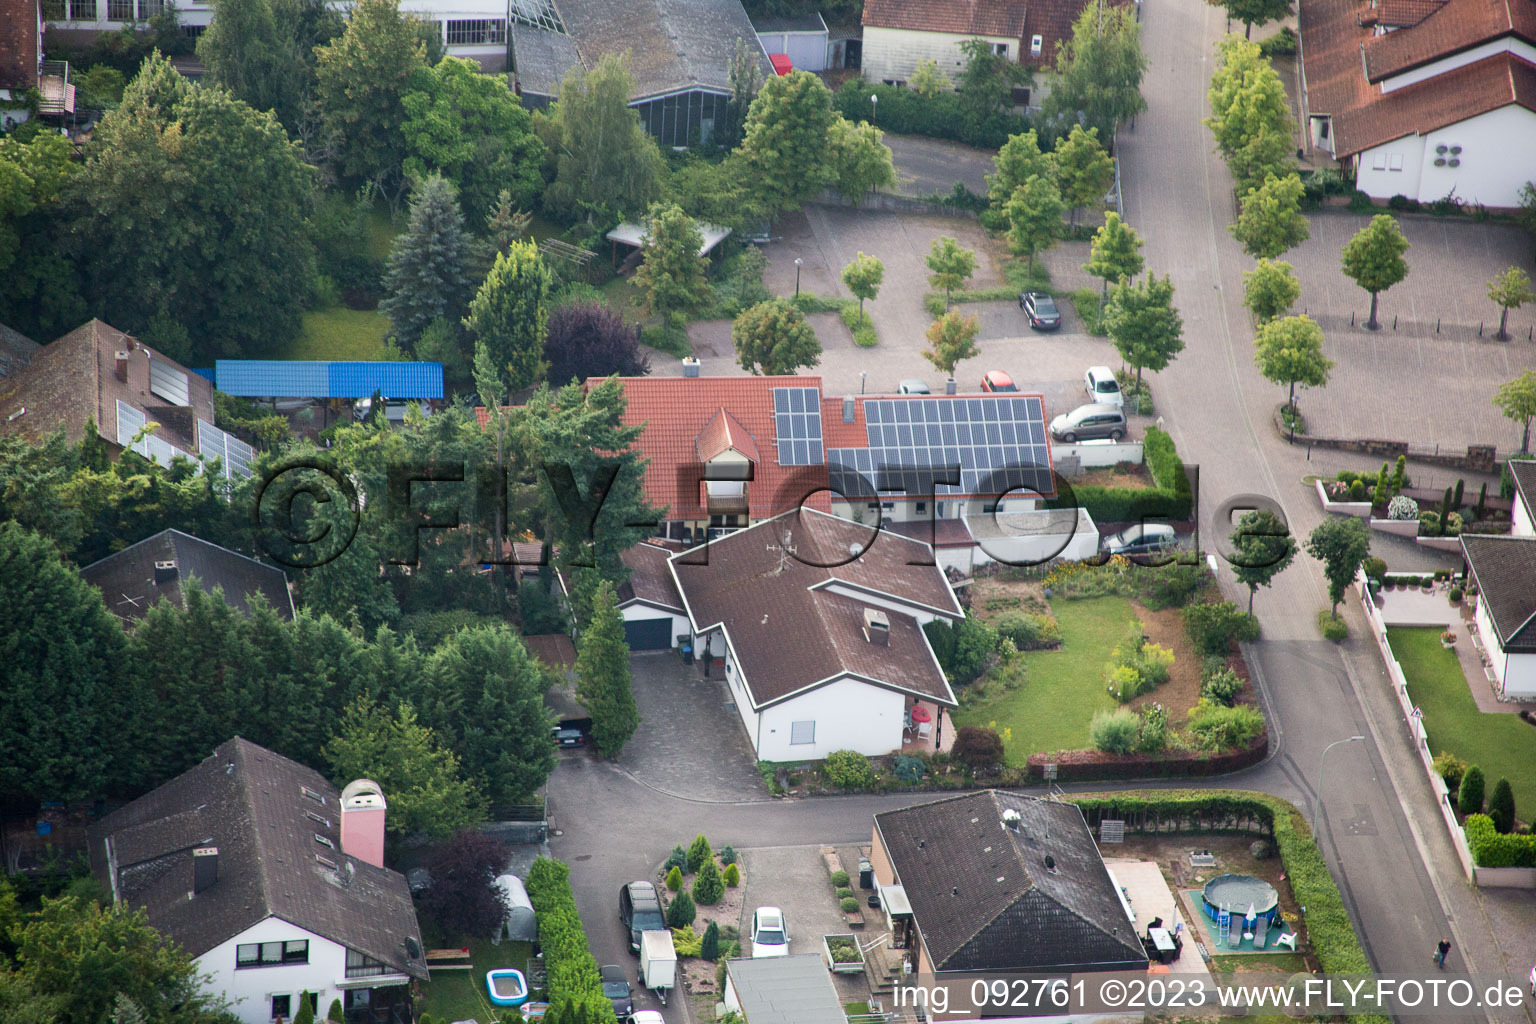 Vue oblique de Quartier Billigheim in Billigheim-Ingenheim dans le département Rhénanie-Palatinat, Allemagne